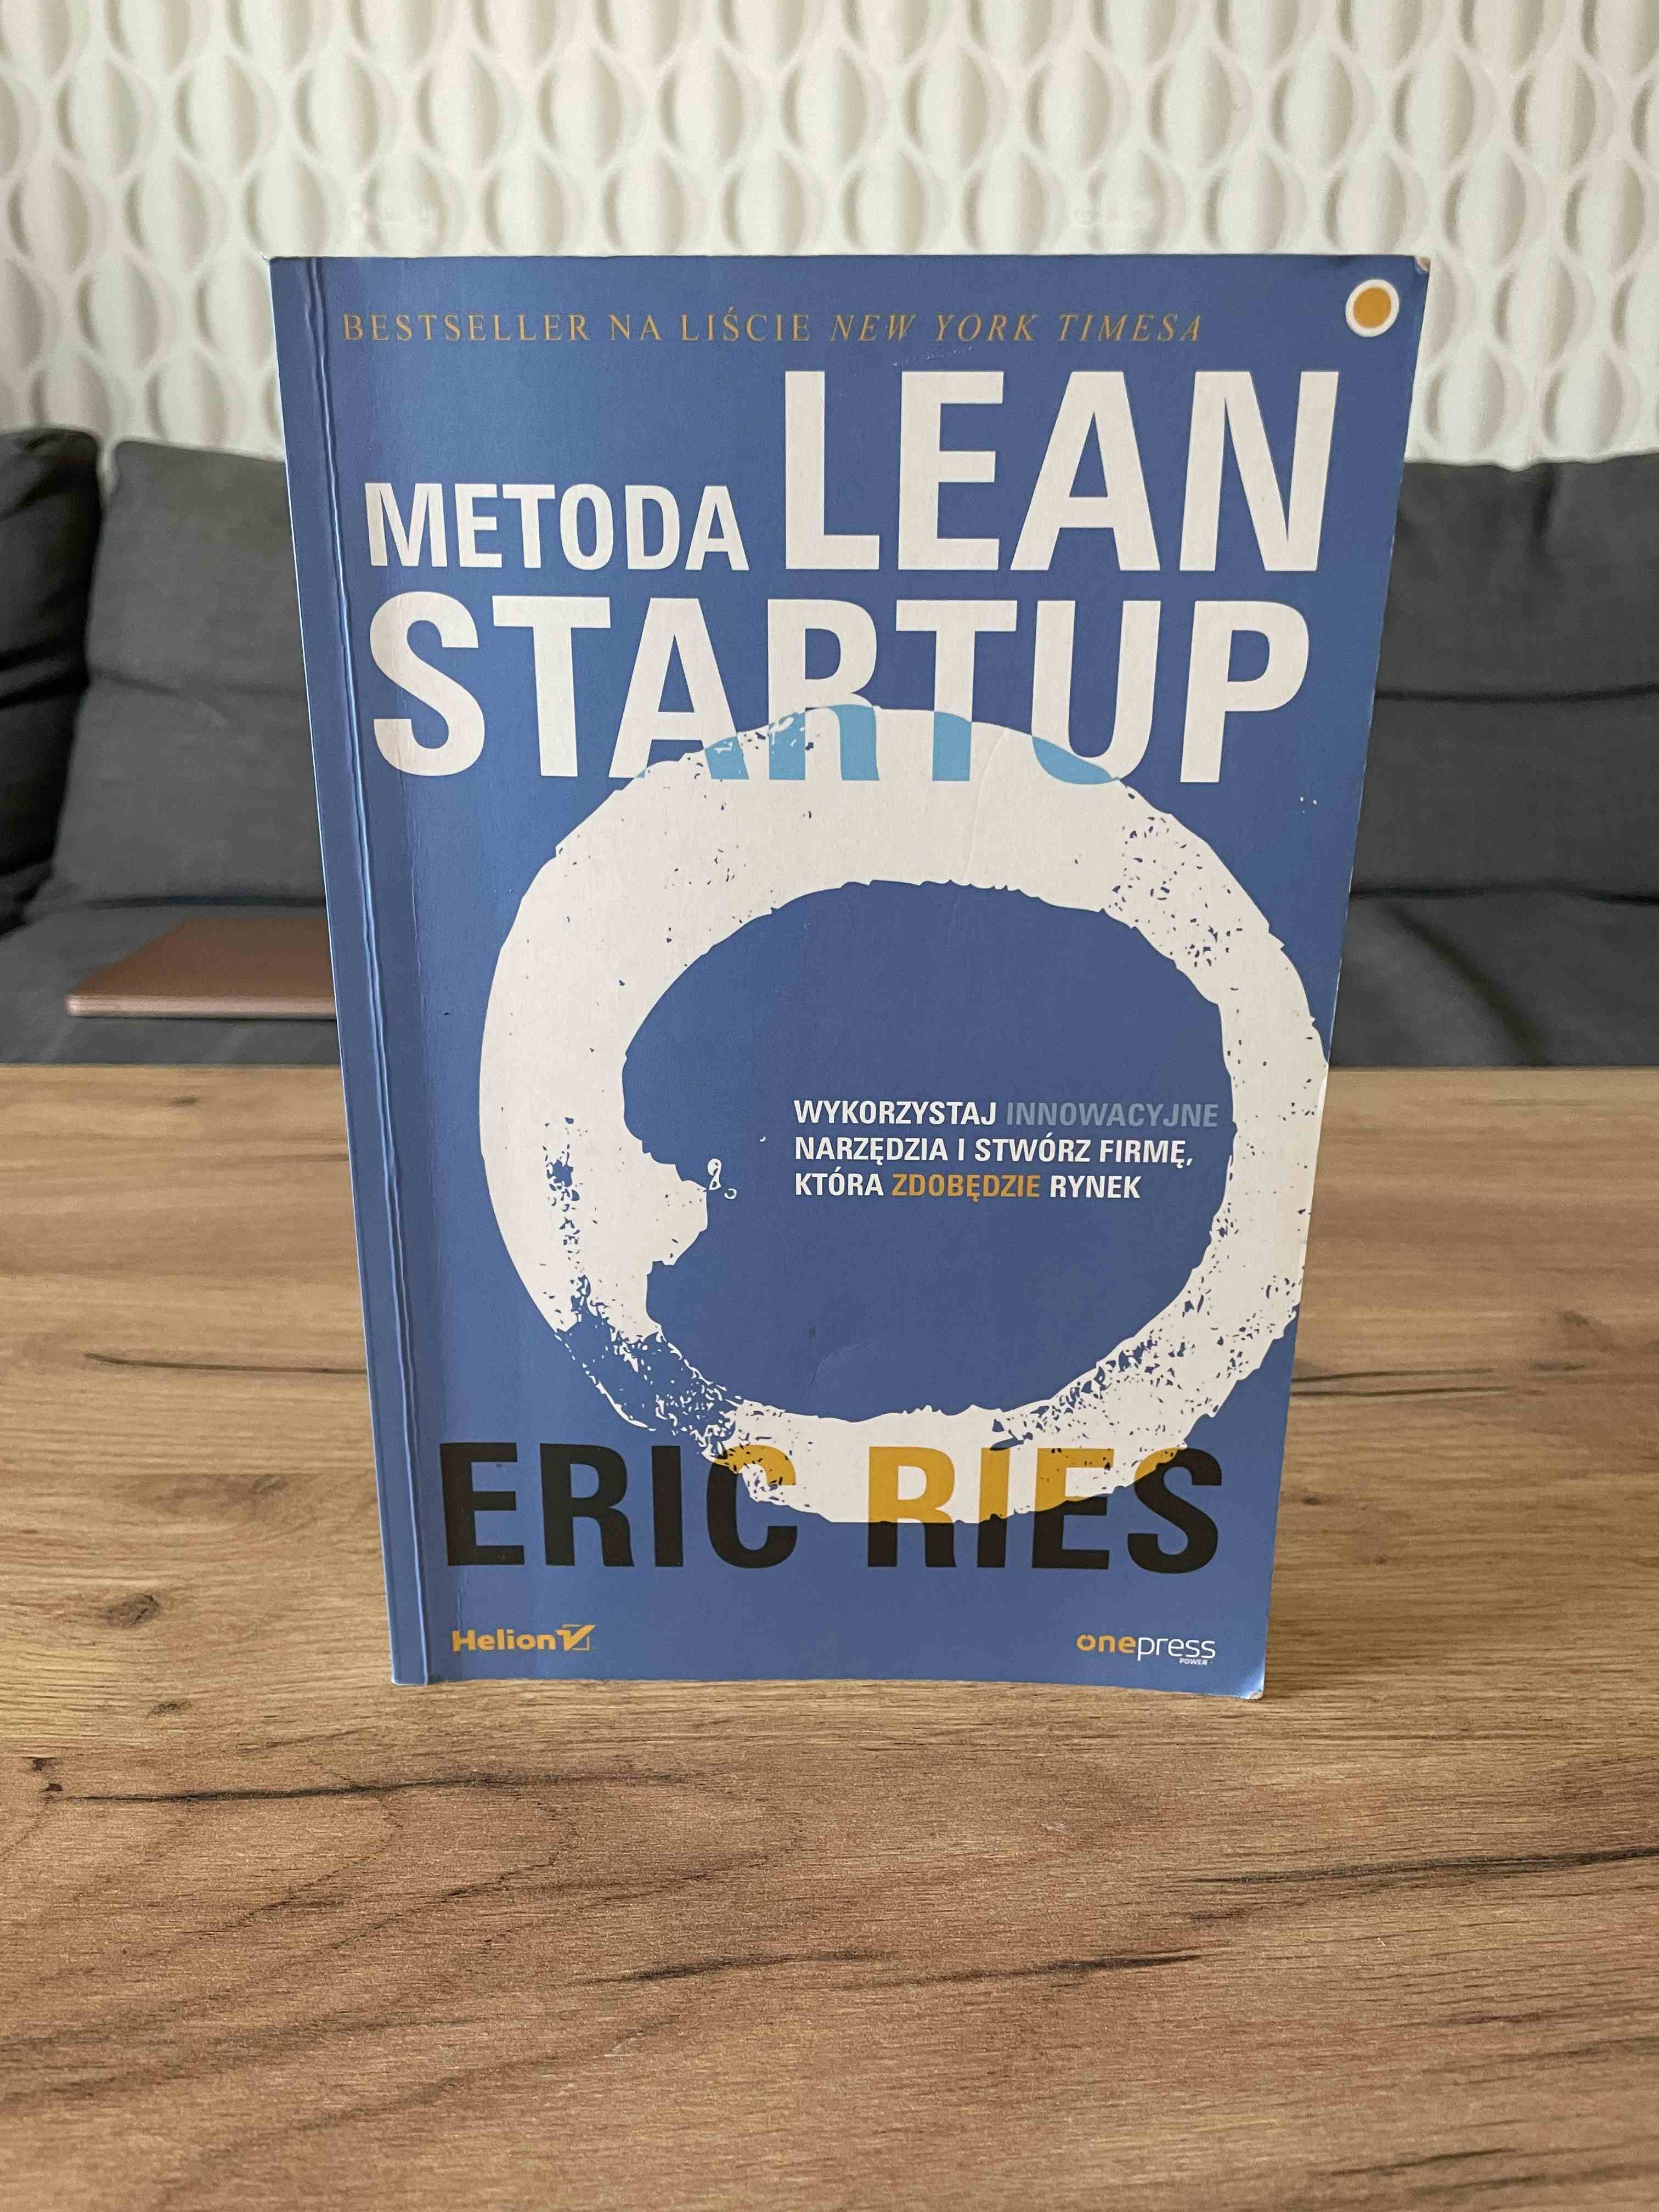 Primary picture of Książka "Metoda Lean Startup". Autor: Eric Ries